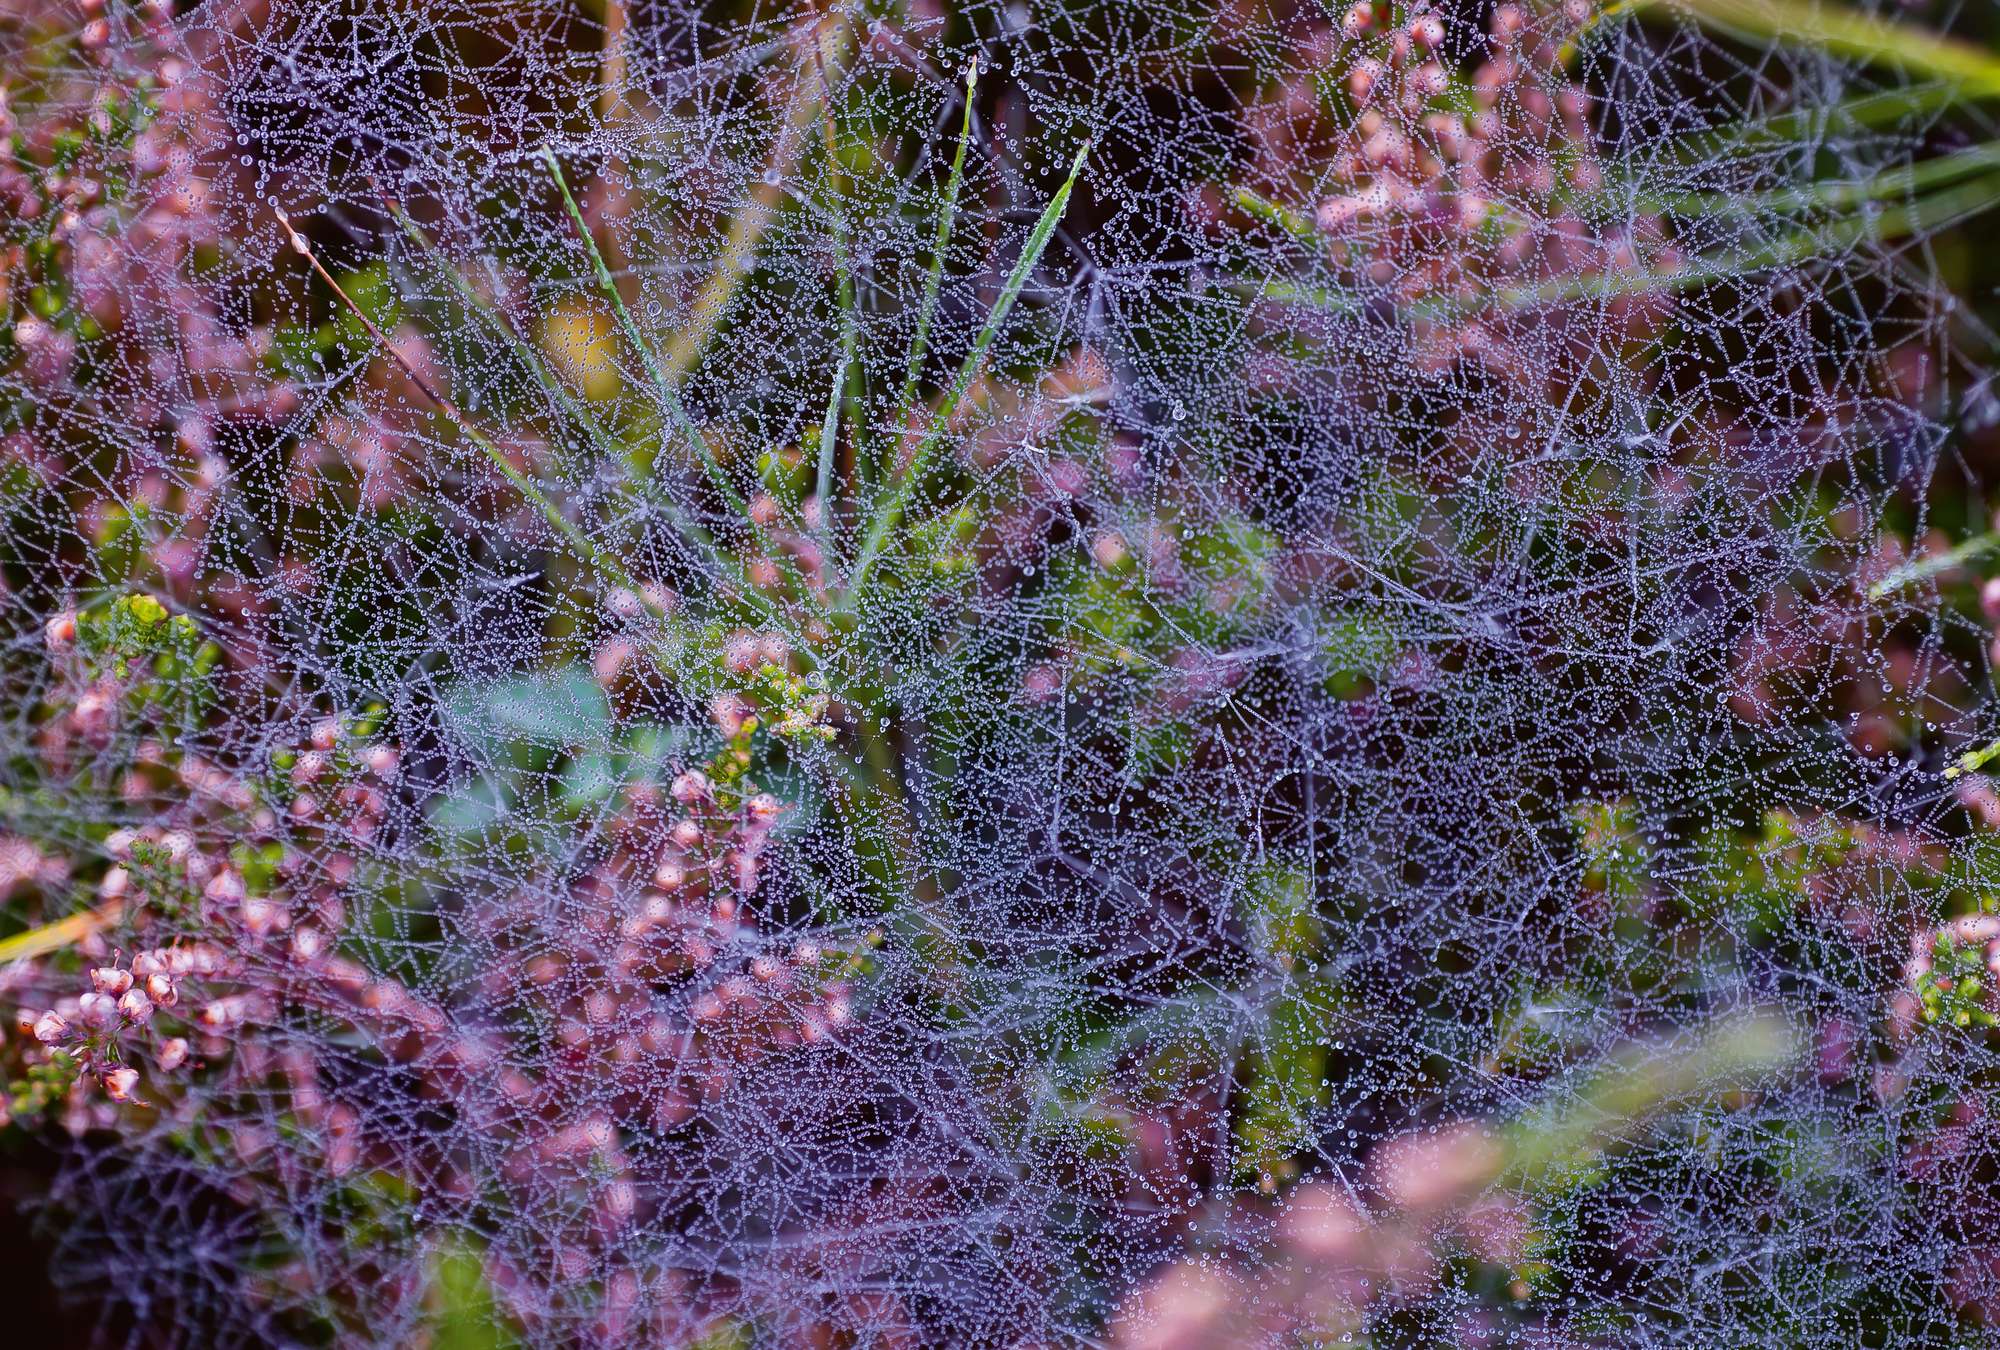             Ochtenddauw - fotobehang spinnenweb in de zon
        